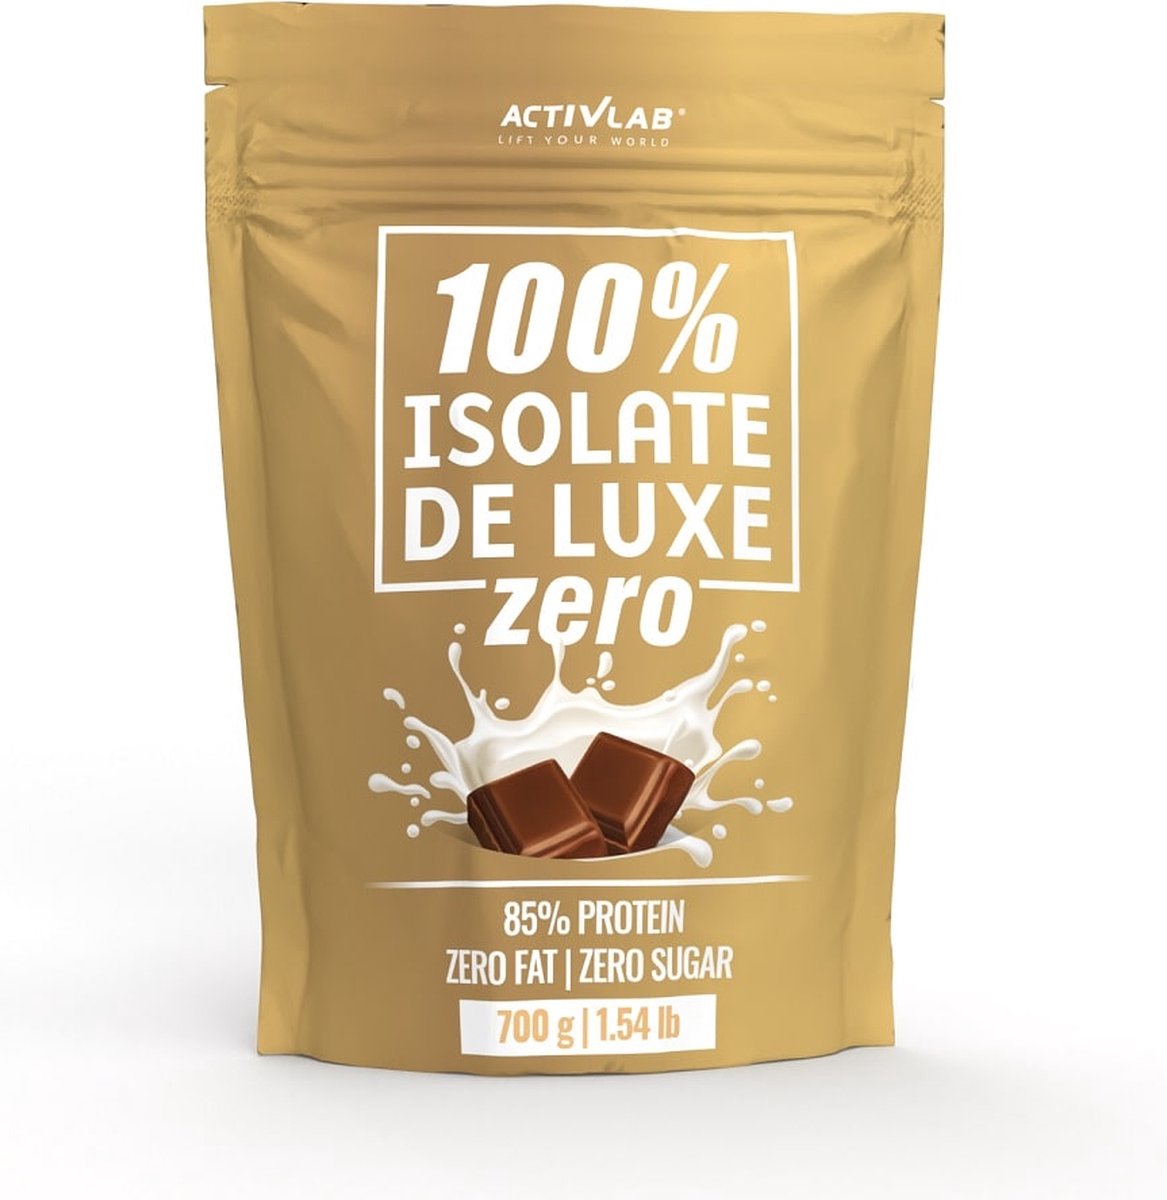 Activlab - 100% Whey Isolate De Luxe Zero - 85g protein - Eiwit Poeder - Whey-Isolaat - Suikervrij/Vetvrij - 700g - Chocolade